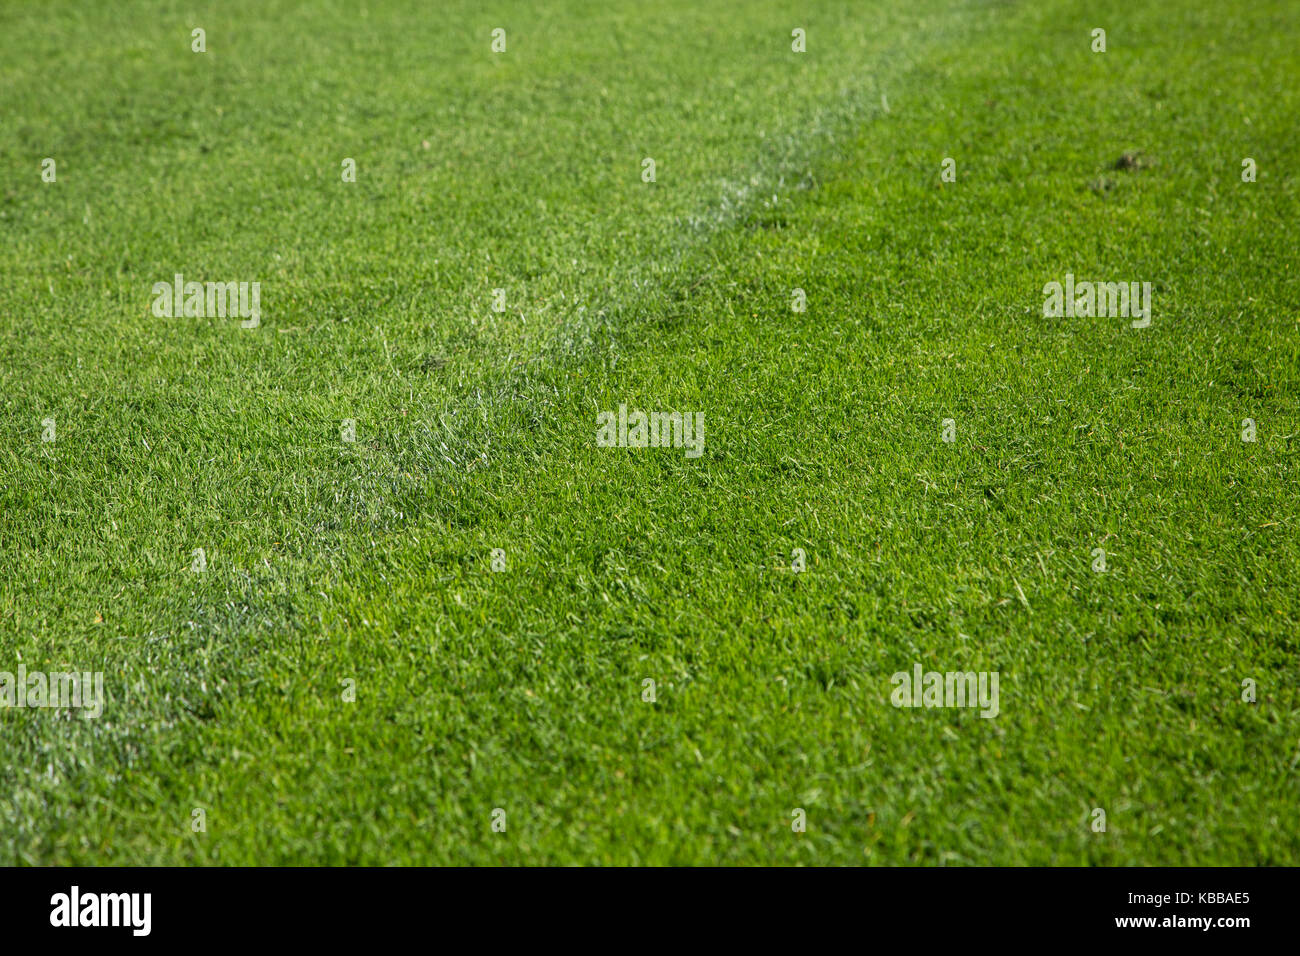 Freshly cut grass on a lush playing field Stock Photo